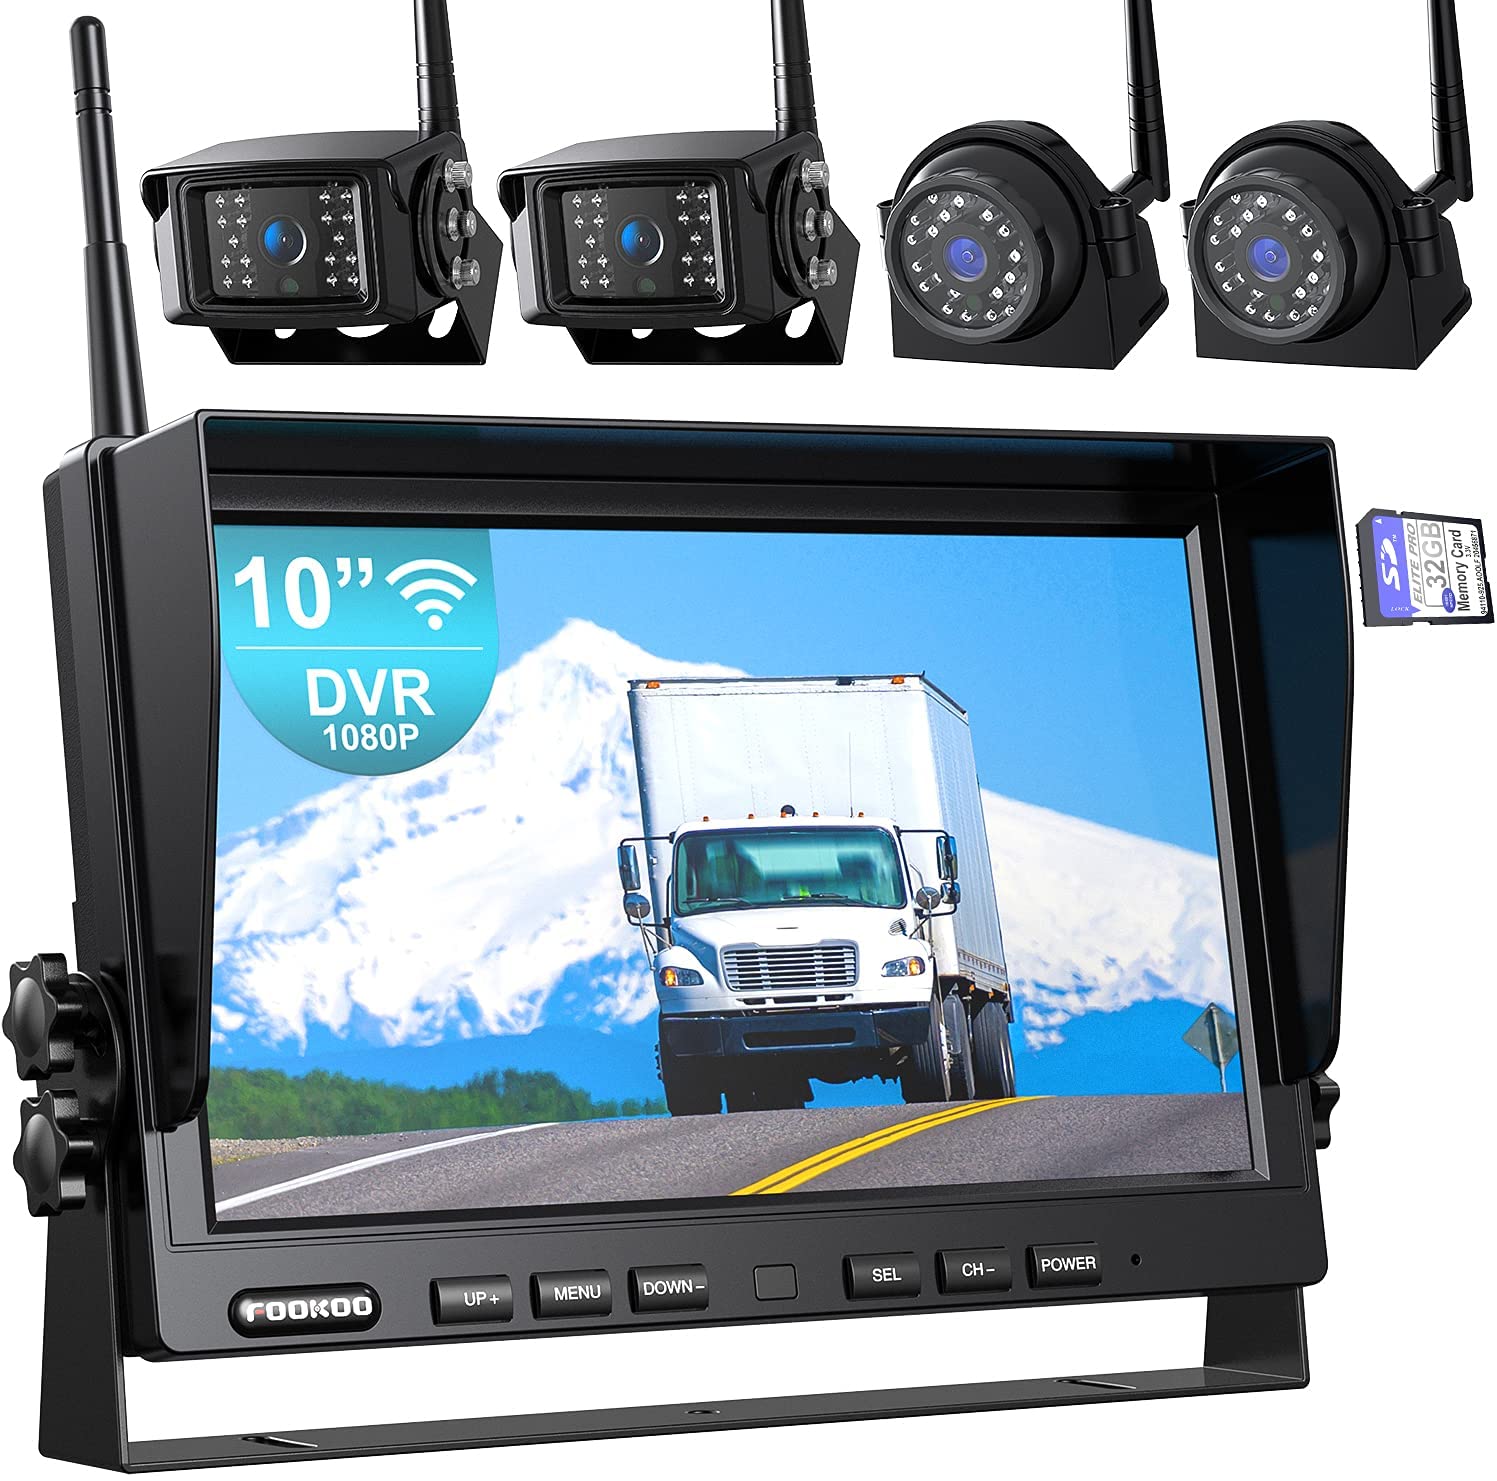  Foxpark Solar Wireless Backup Camera, 1080P 5'' Monitor Back Up  Camera Systems Wireless, 3 Mins DIY Installation, Reverse Camera for Car,  Truck, Van, RV (S3) : Electronics